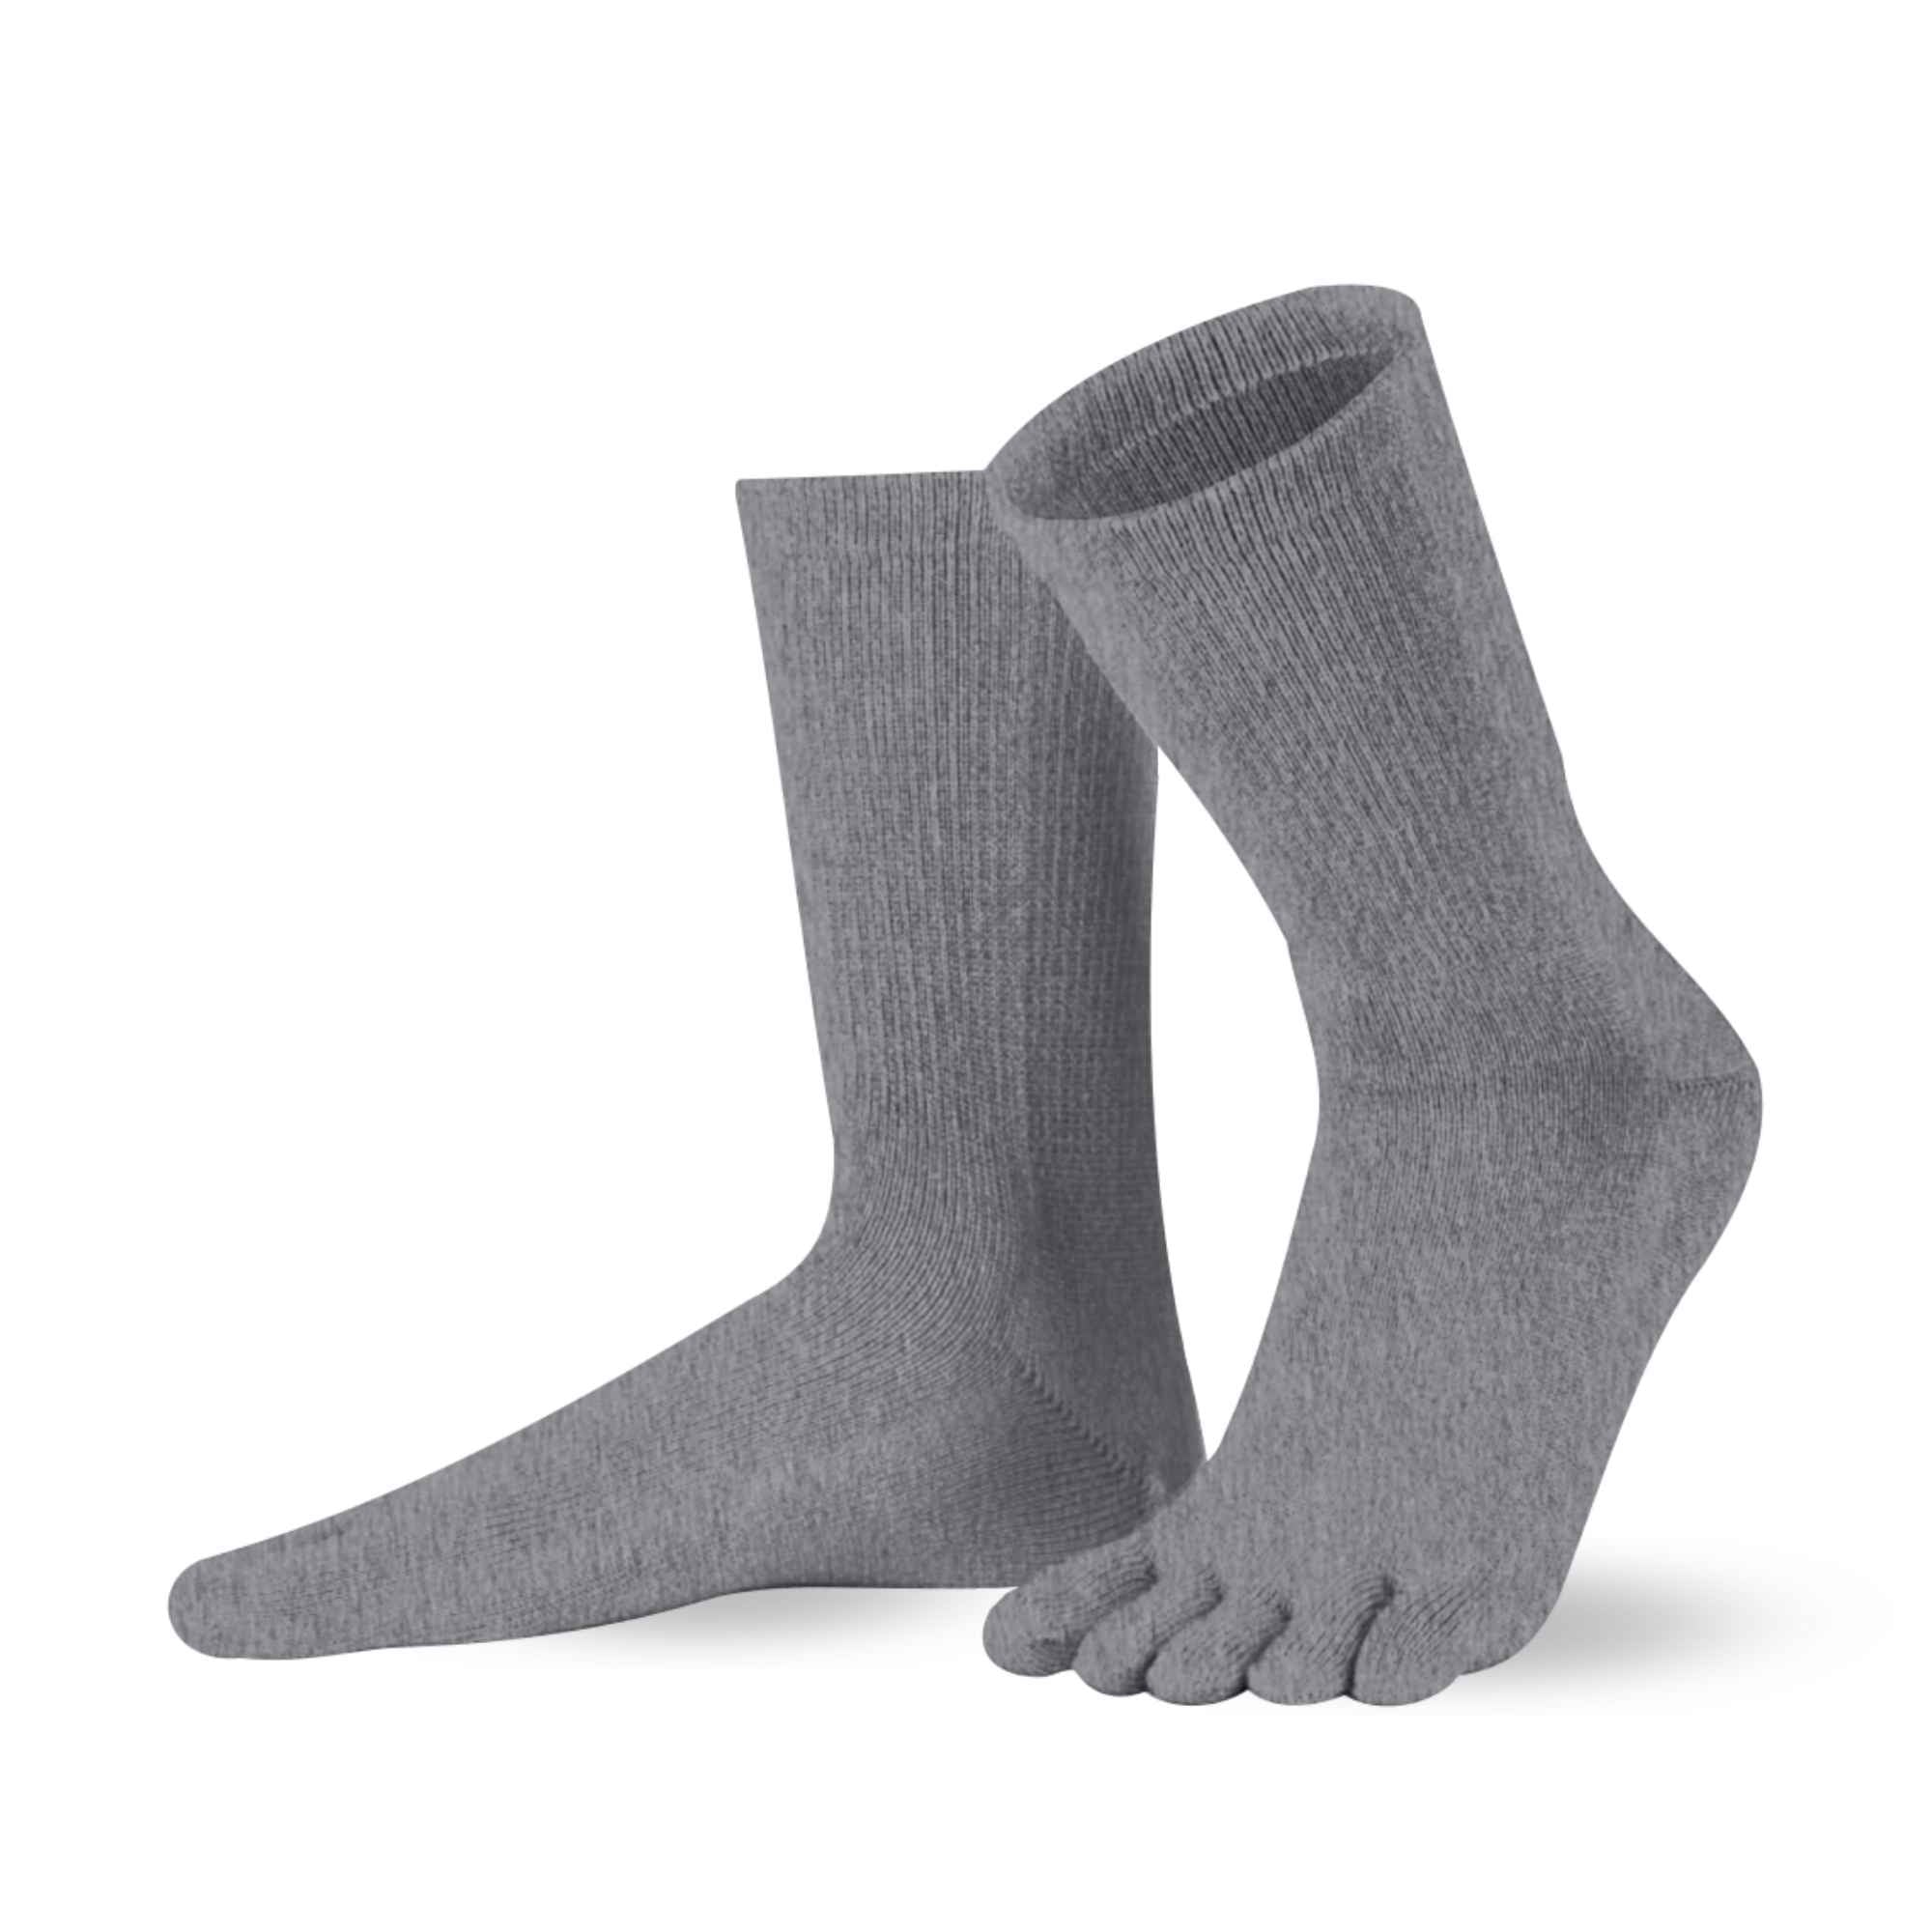 Cotton & Merino , mid-calf - Knitido®. The toe socks